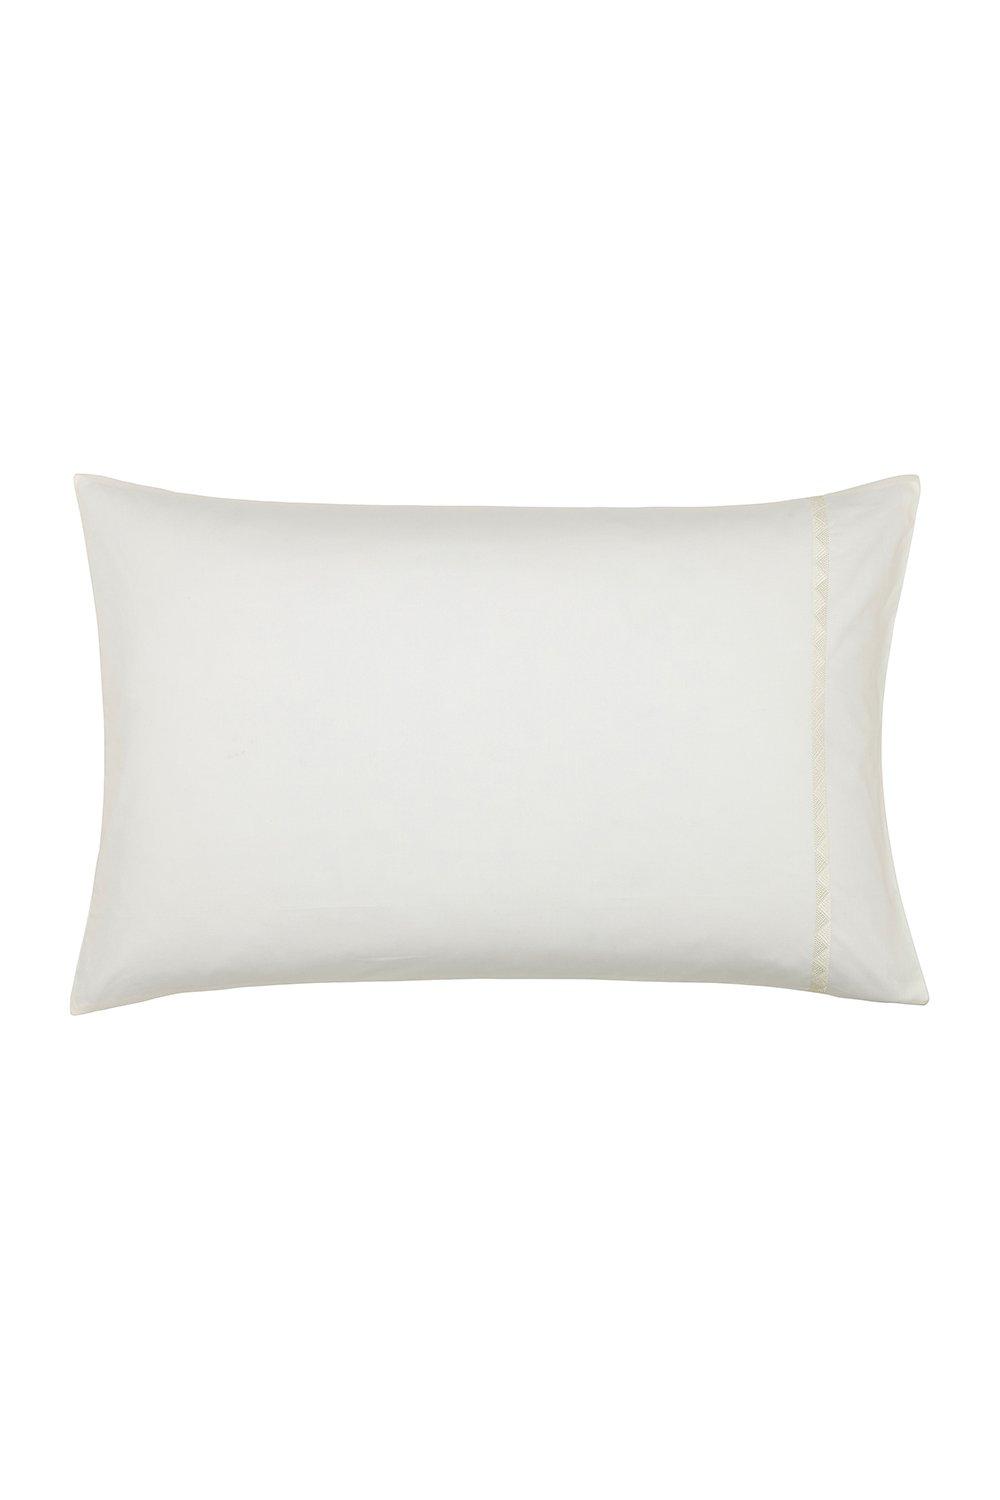 'Palm House & Jackfruit' Standard Pillowcase Pairs